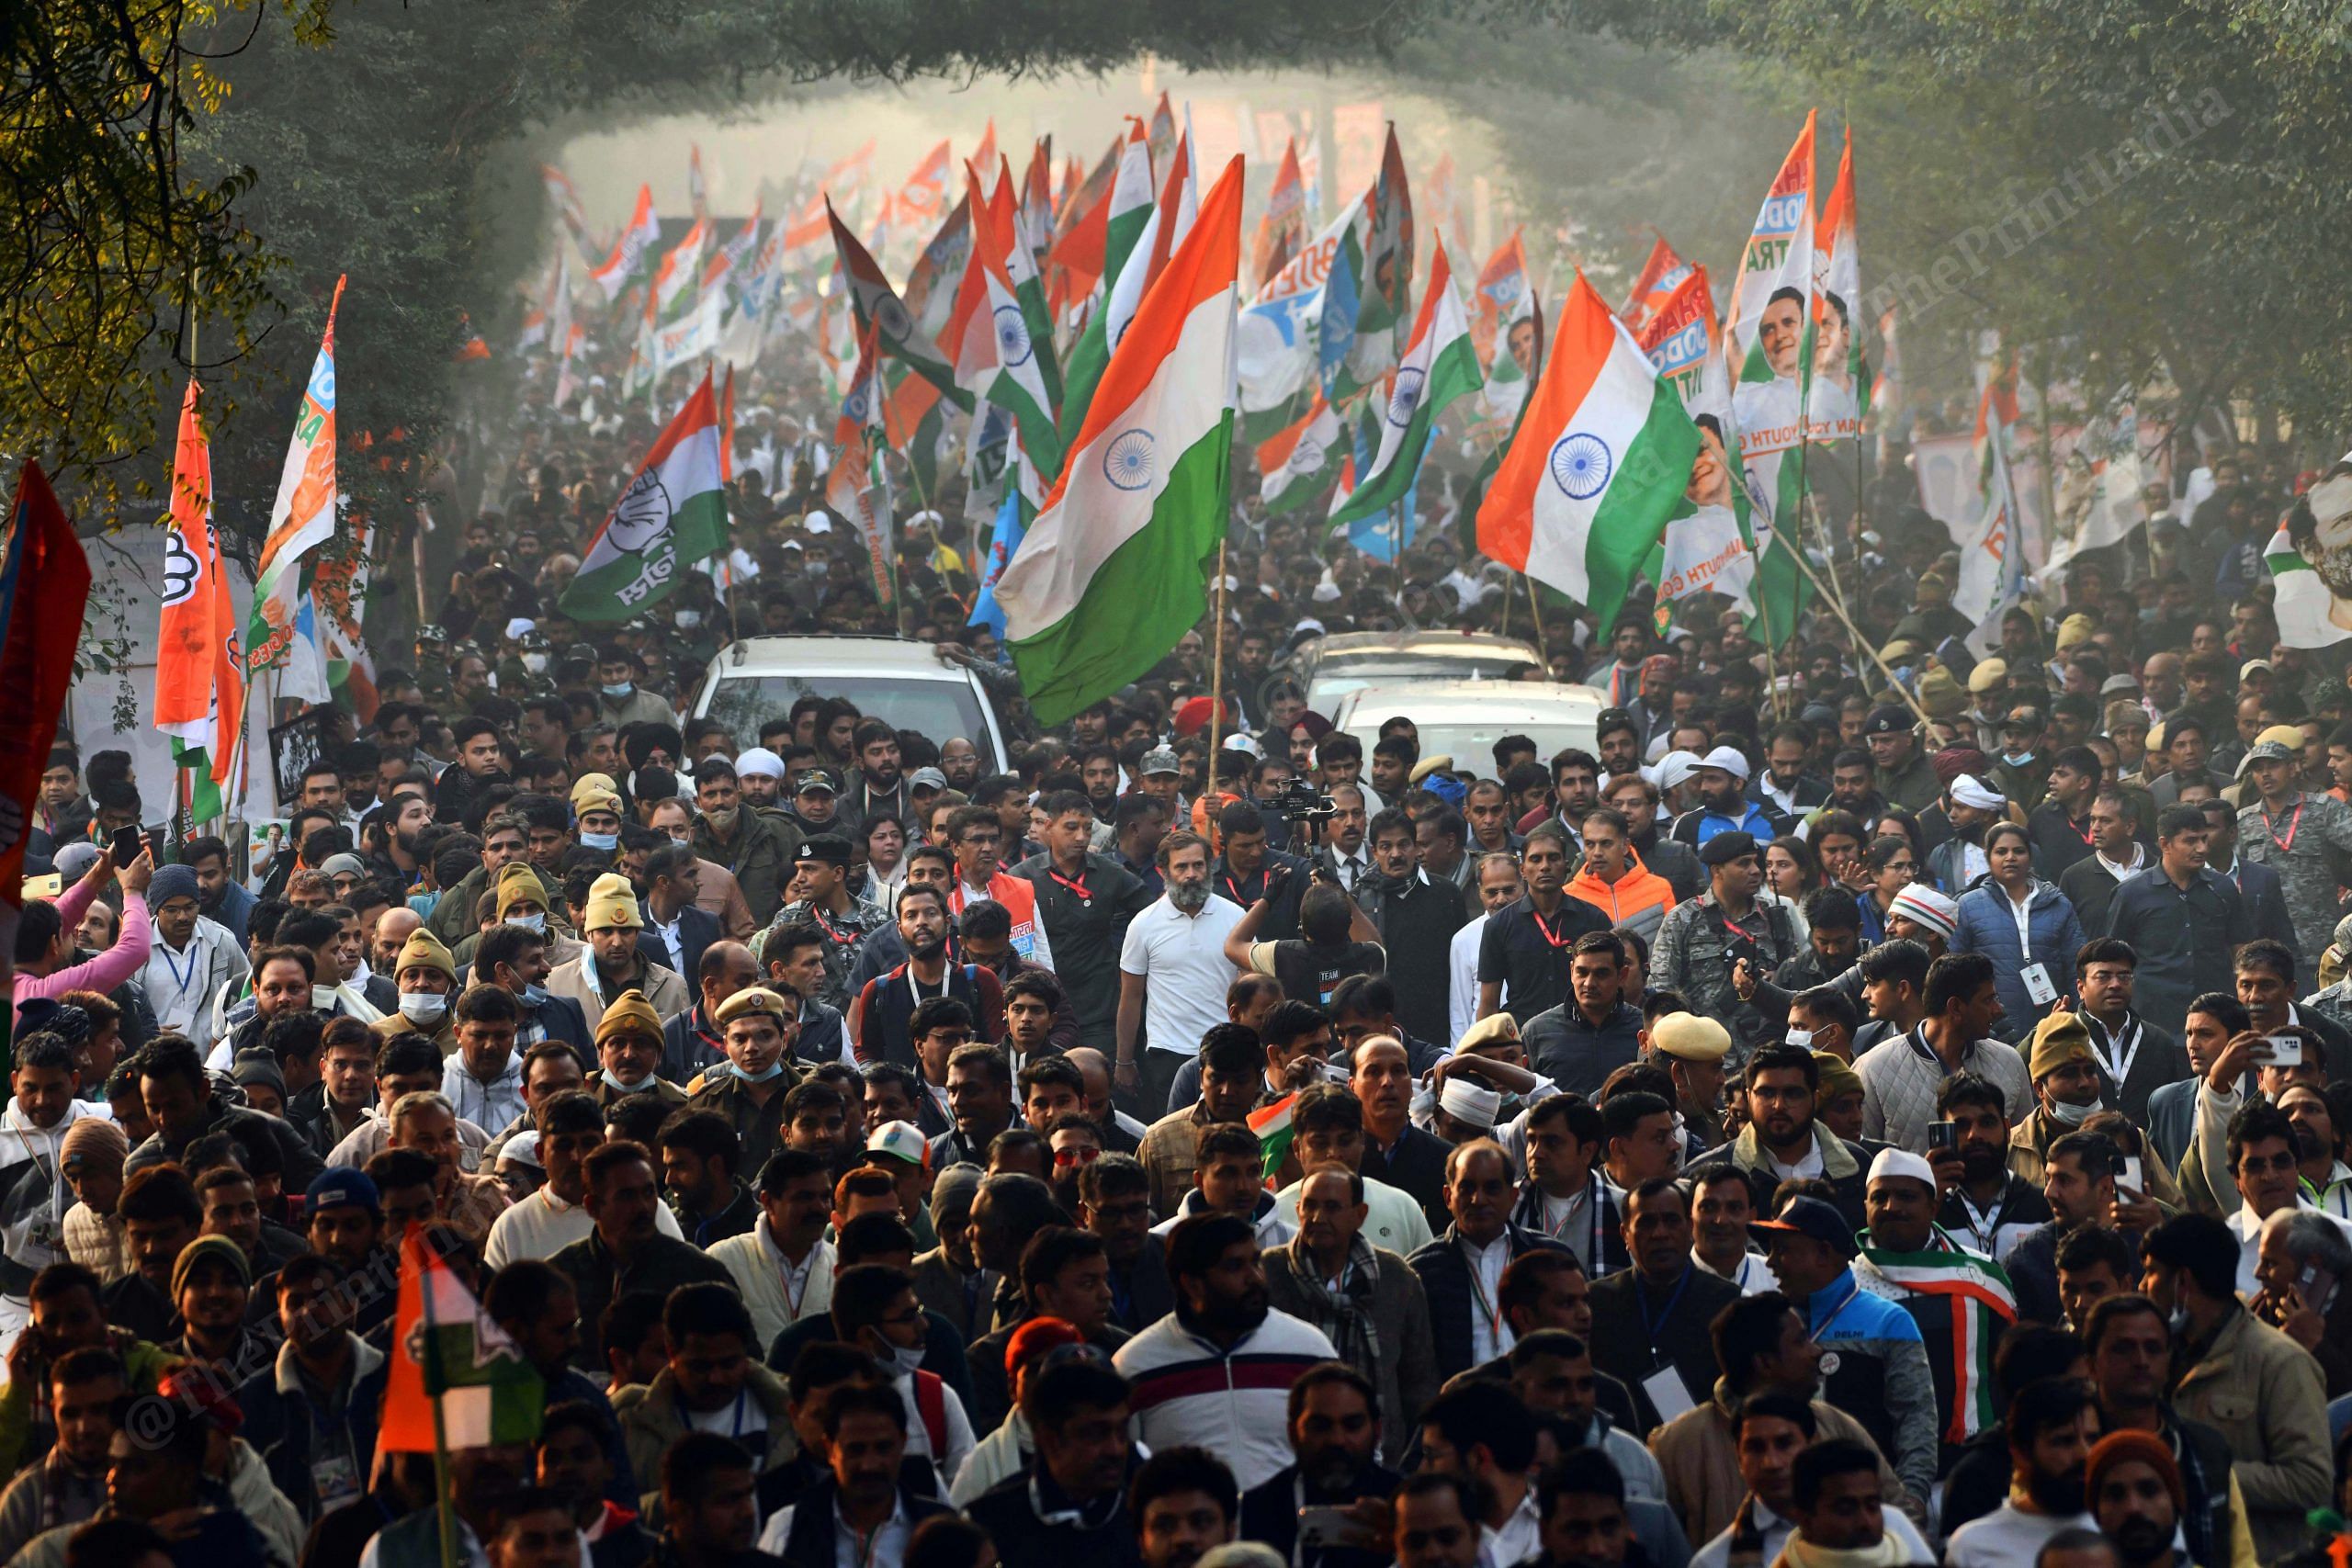 Congress supporters at Saturday's Yatra in Delhi | Photo: Suraj Singh Bisht | ThePrint